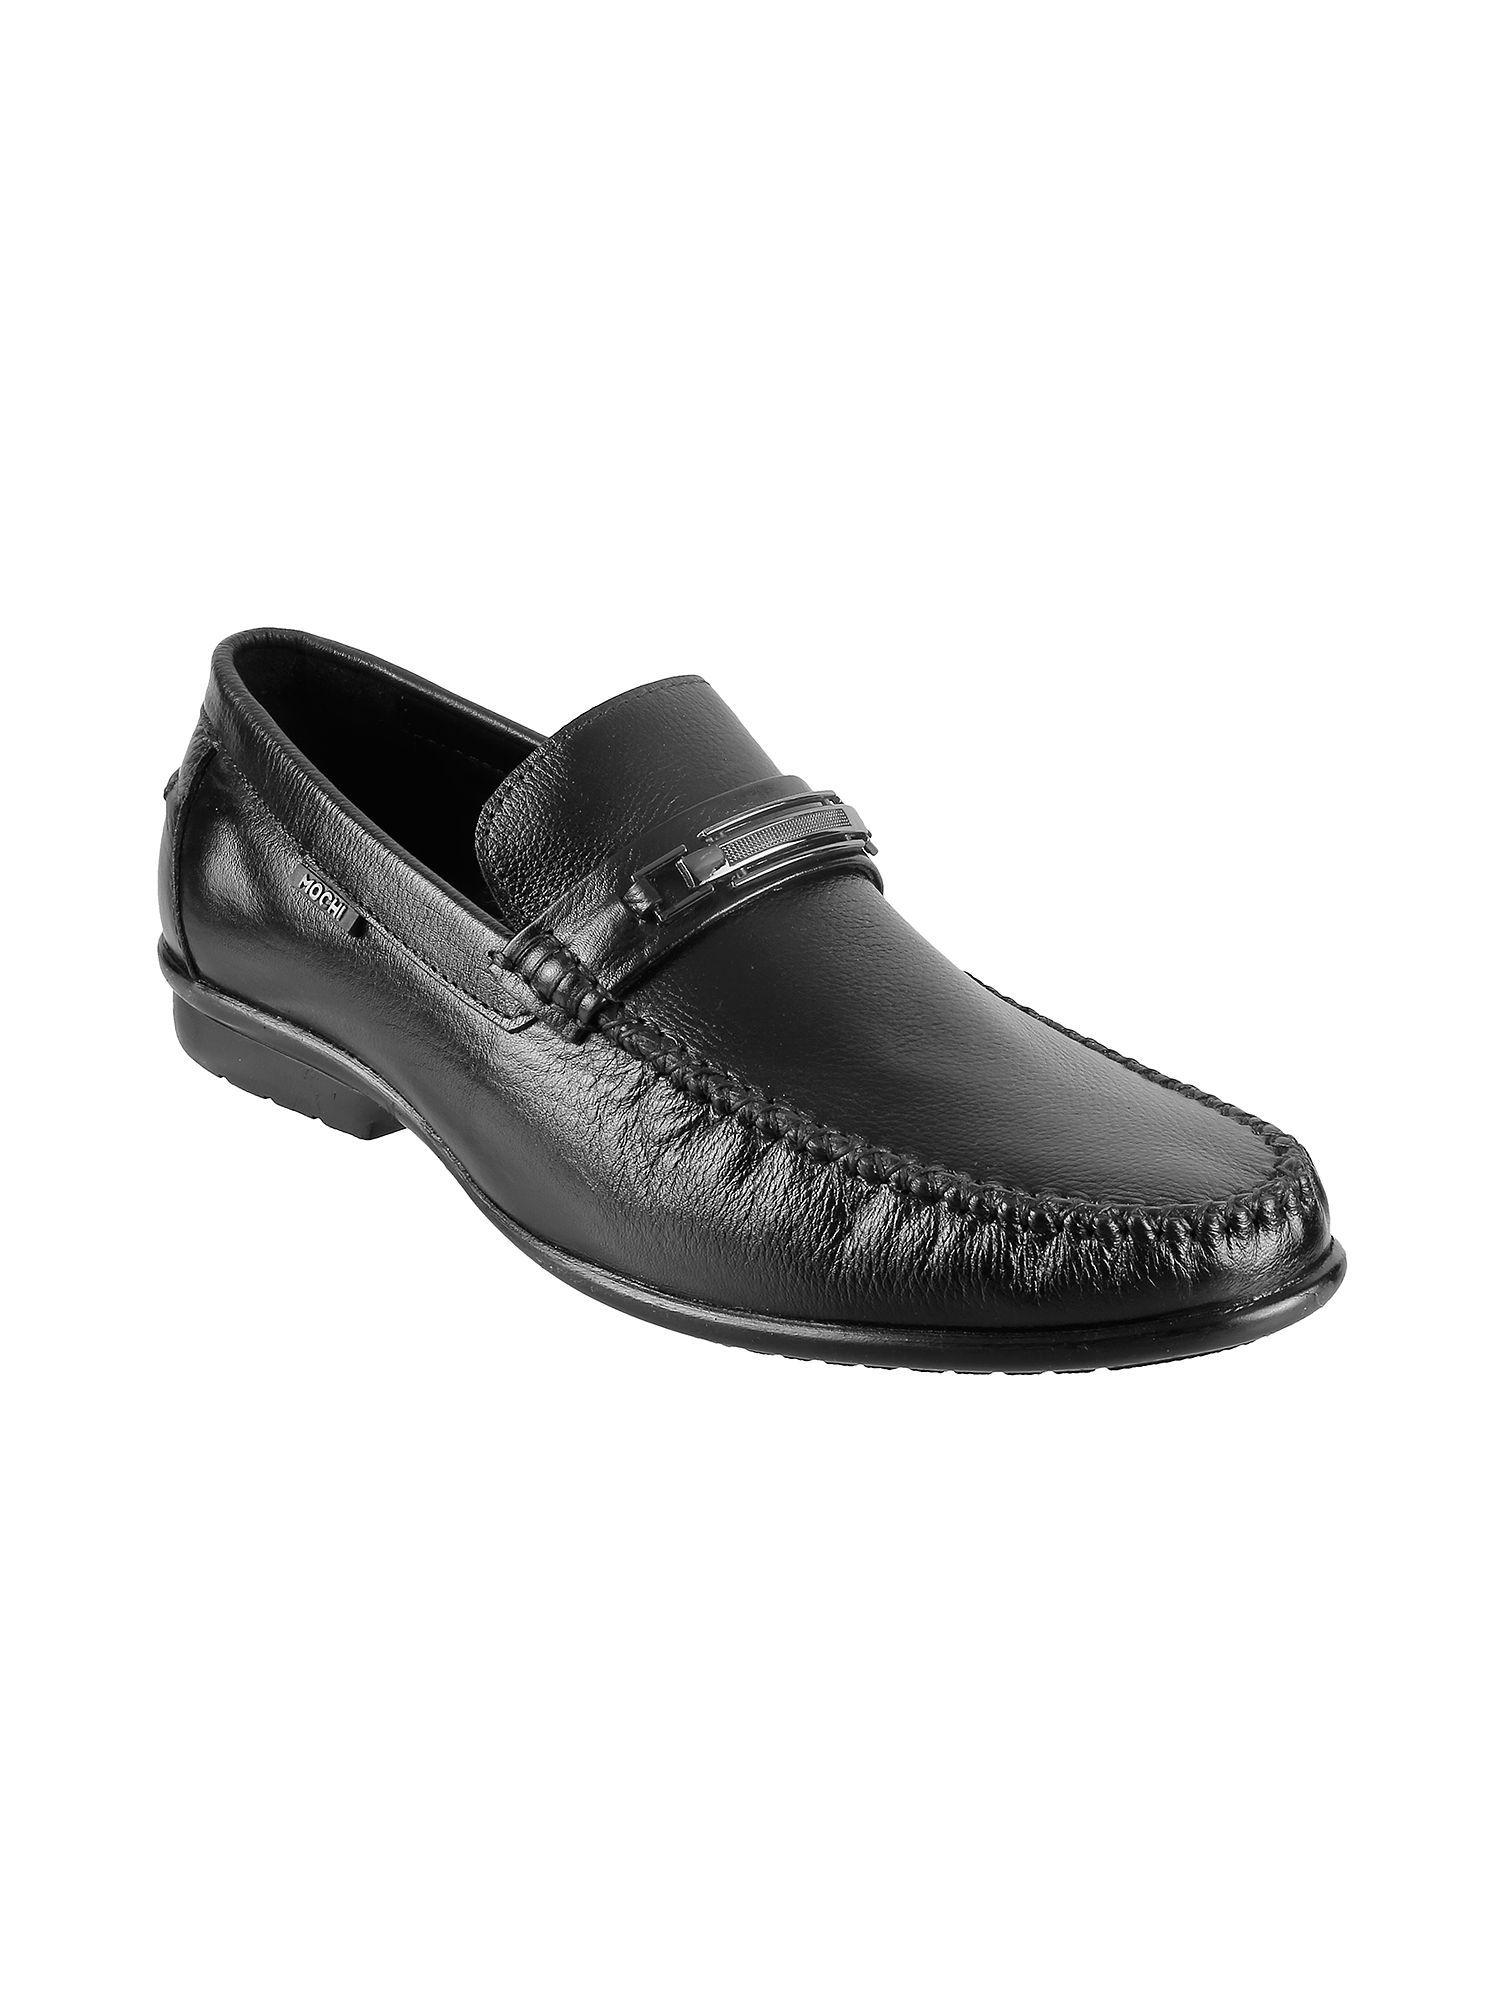 black solid formal loafers